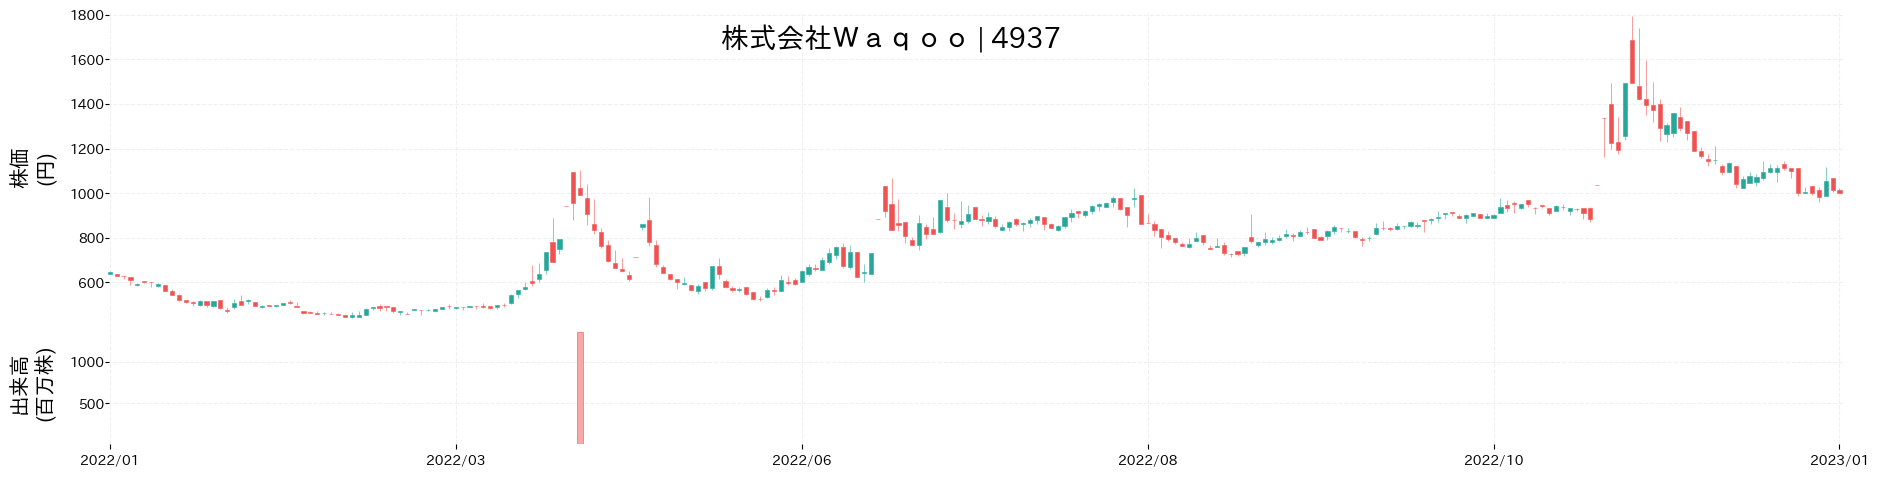 Waqooの株価推移(2022)